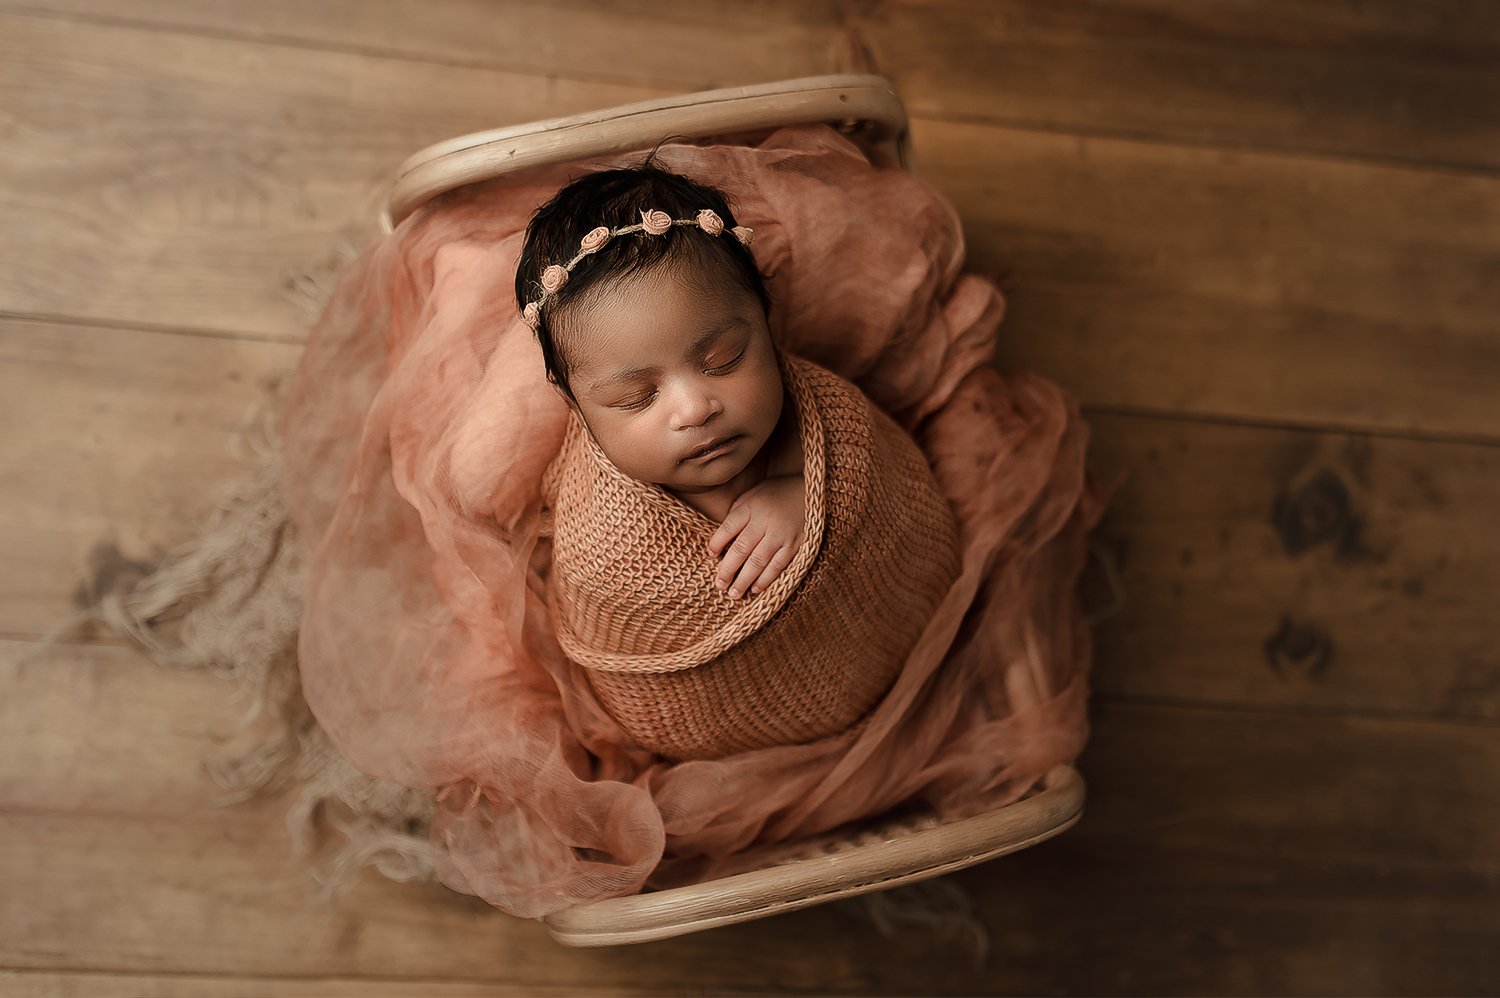 Jessica Fenfert Baltimore Maryland Newborn Photographer baby in bed pose